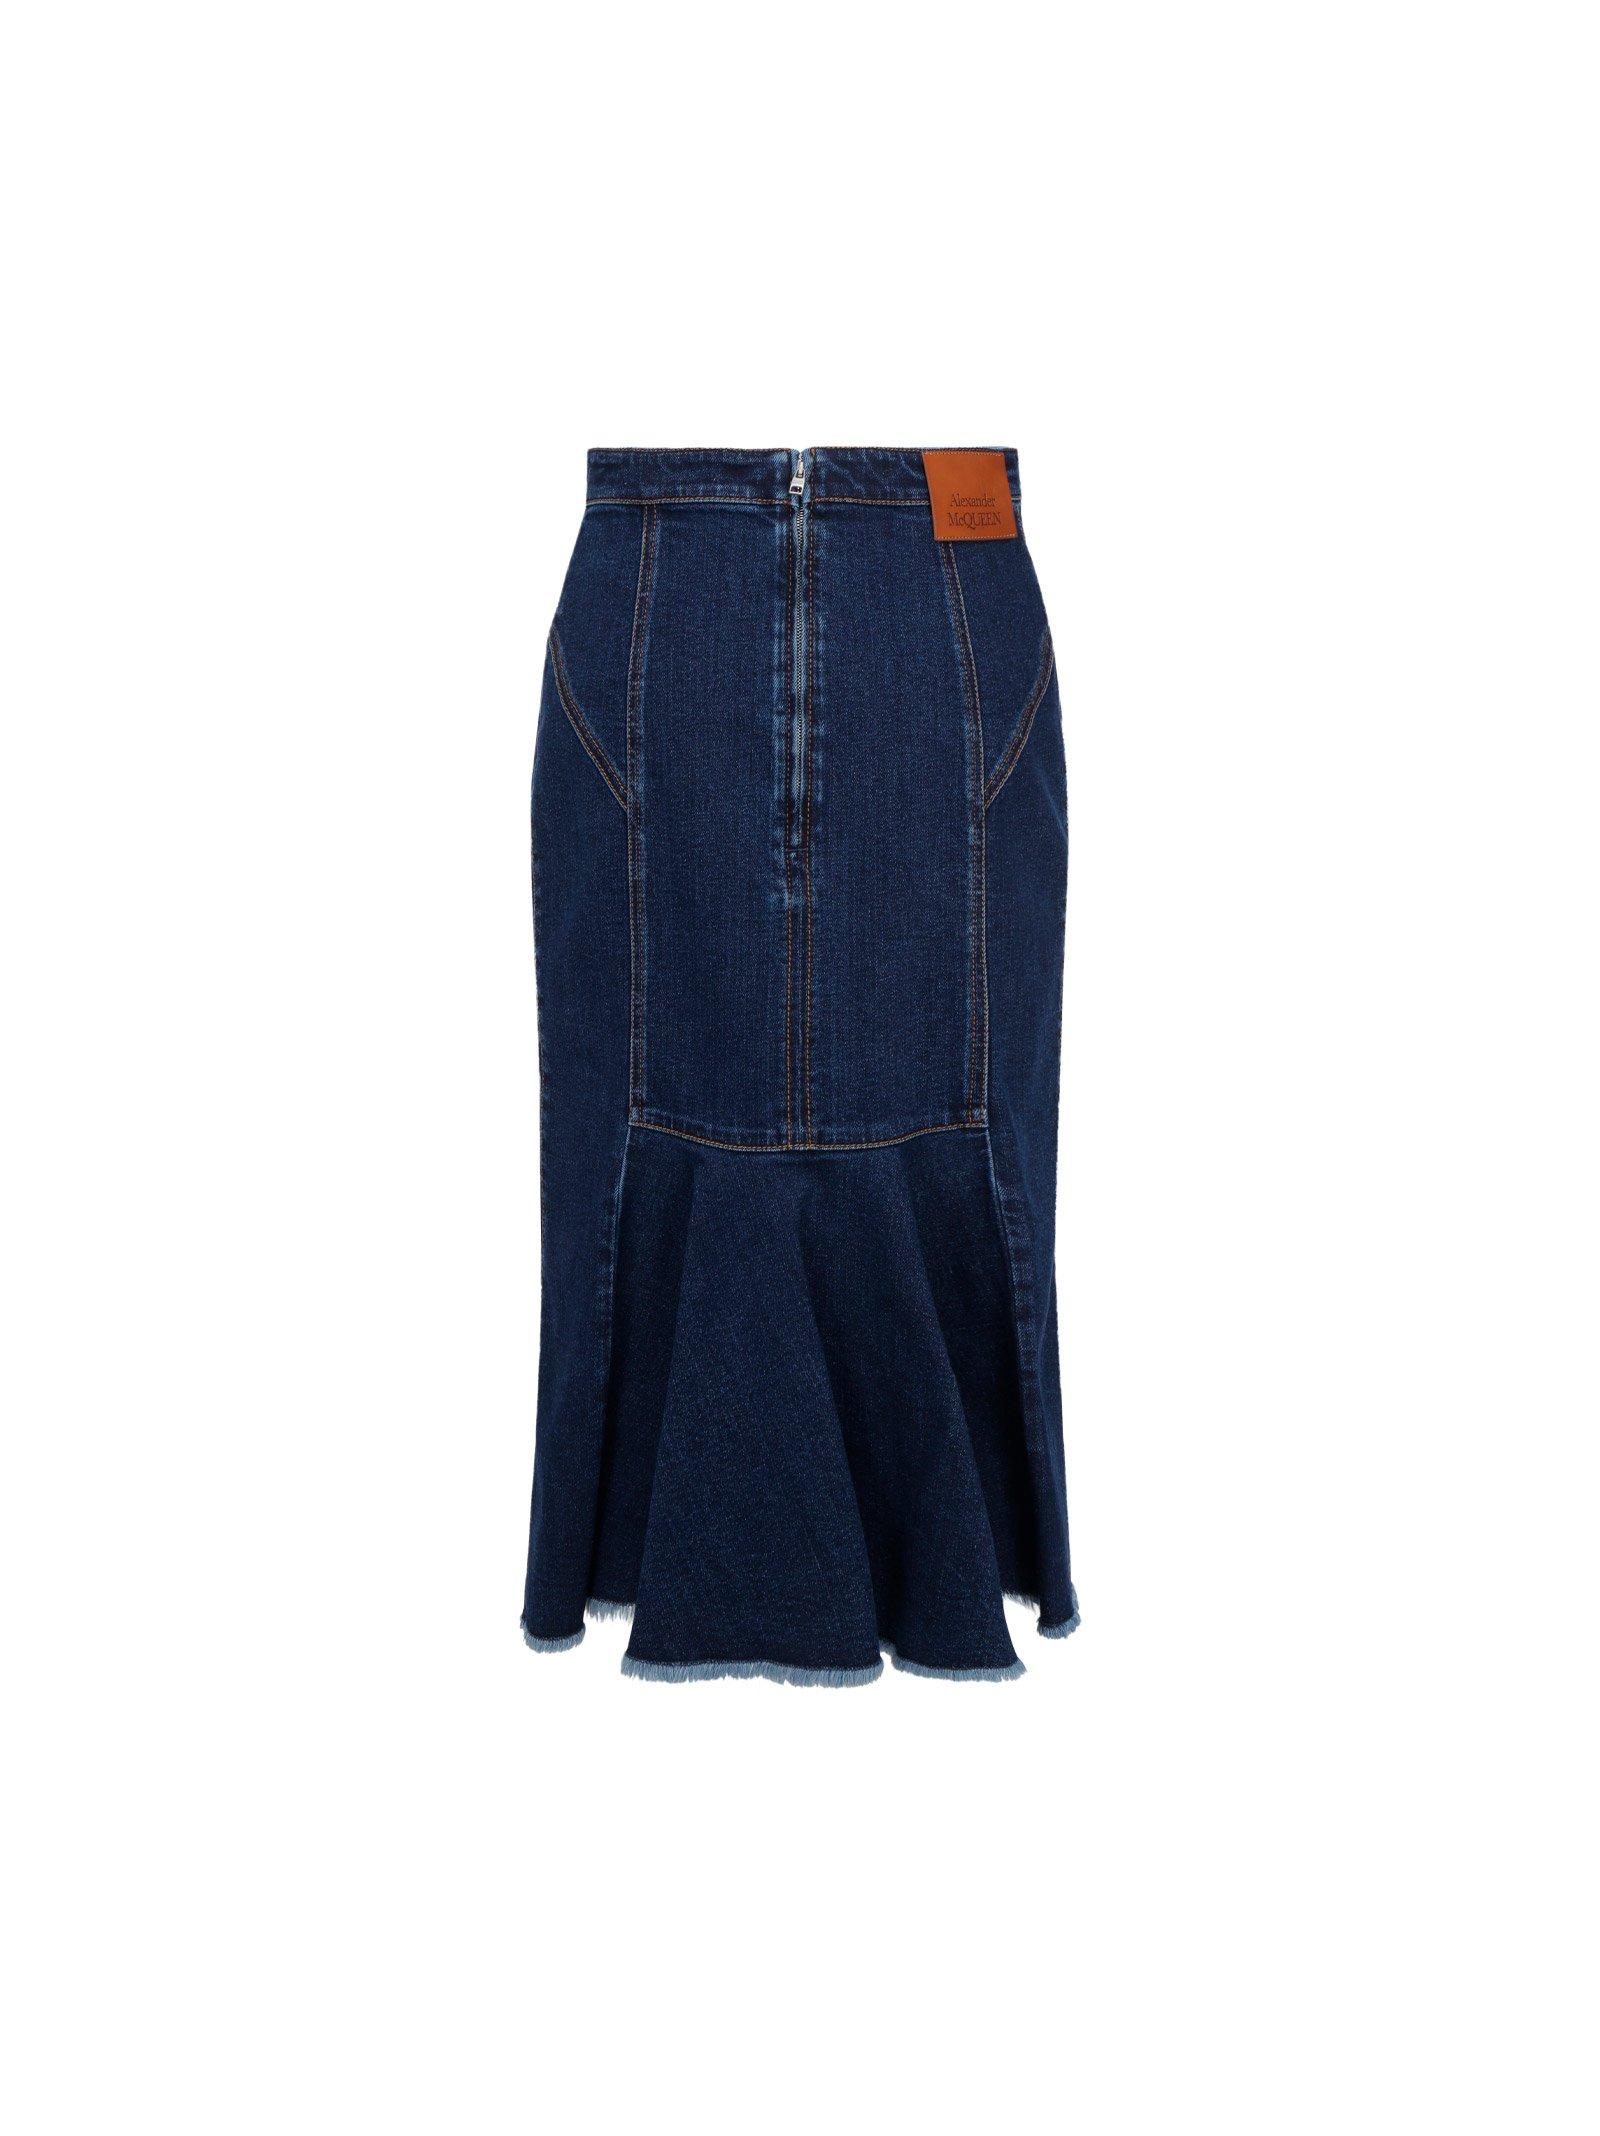 Alexander McQueen Panelled Denim Skirt in Blue - Lyst